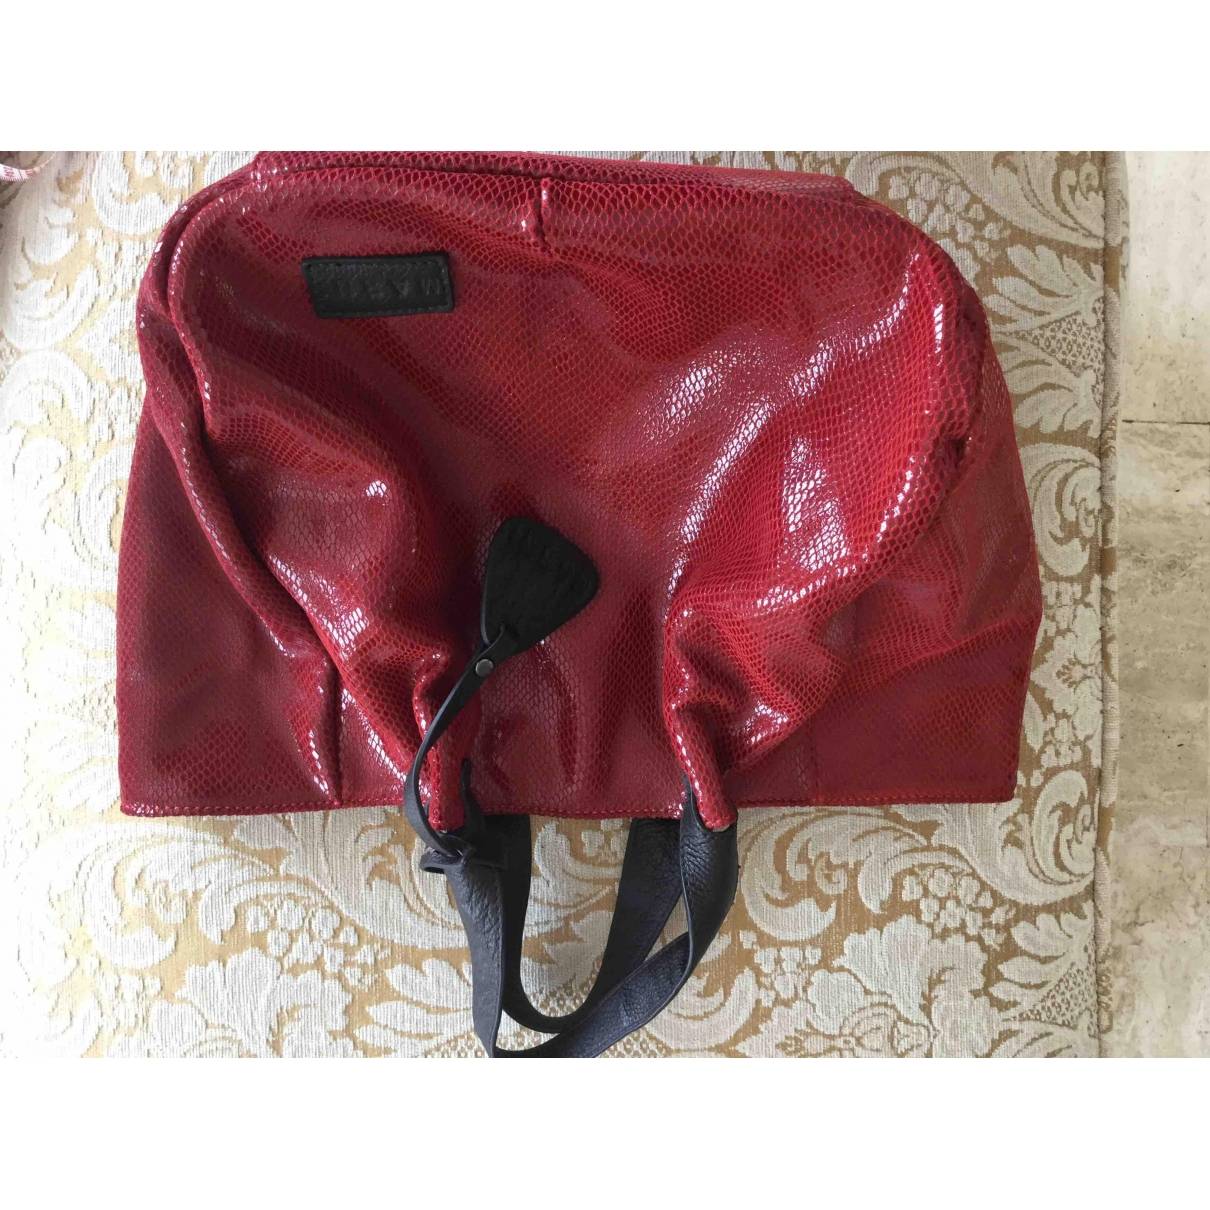 Marni Authenticated Patent Leather Handbag